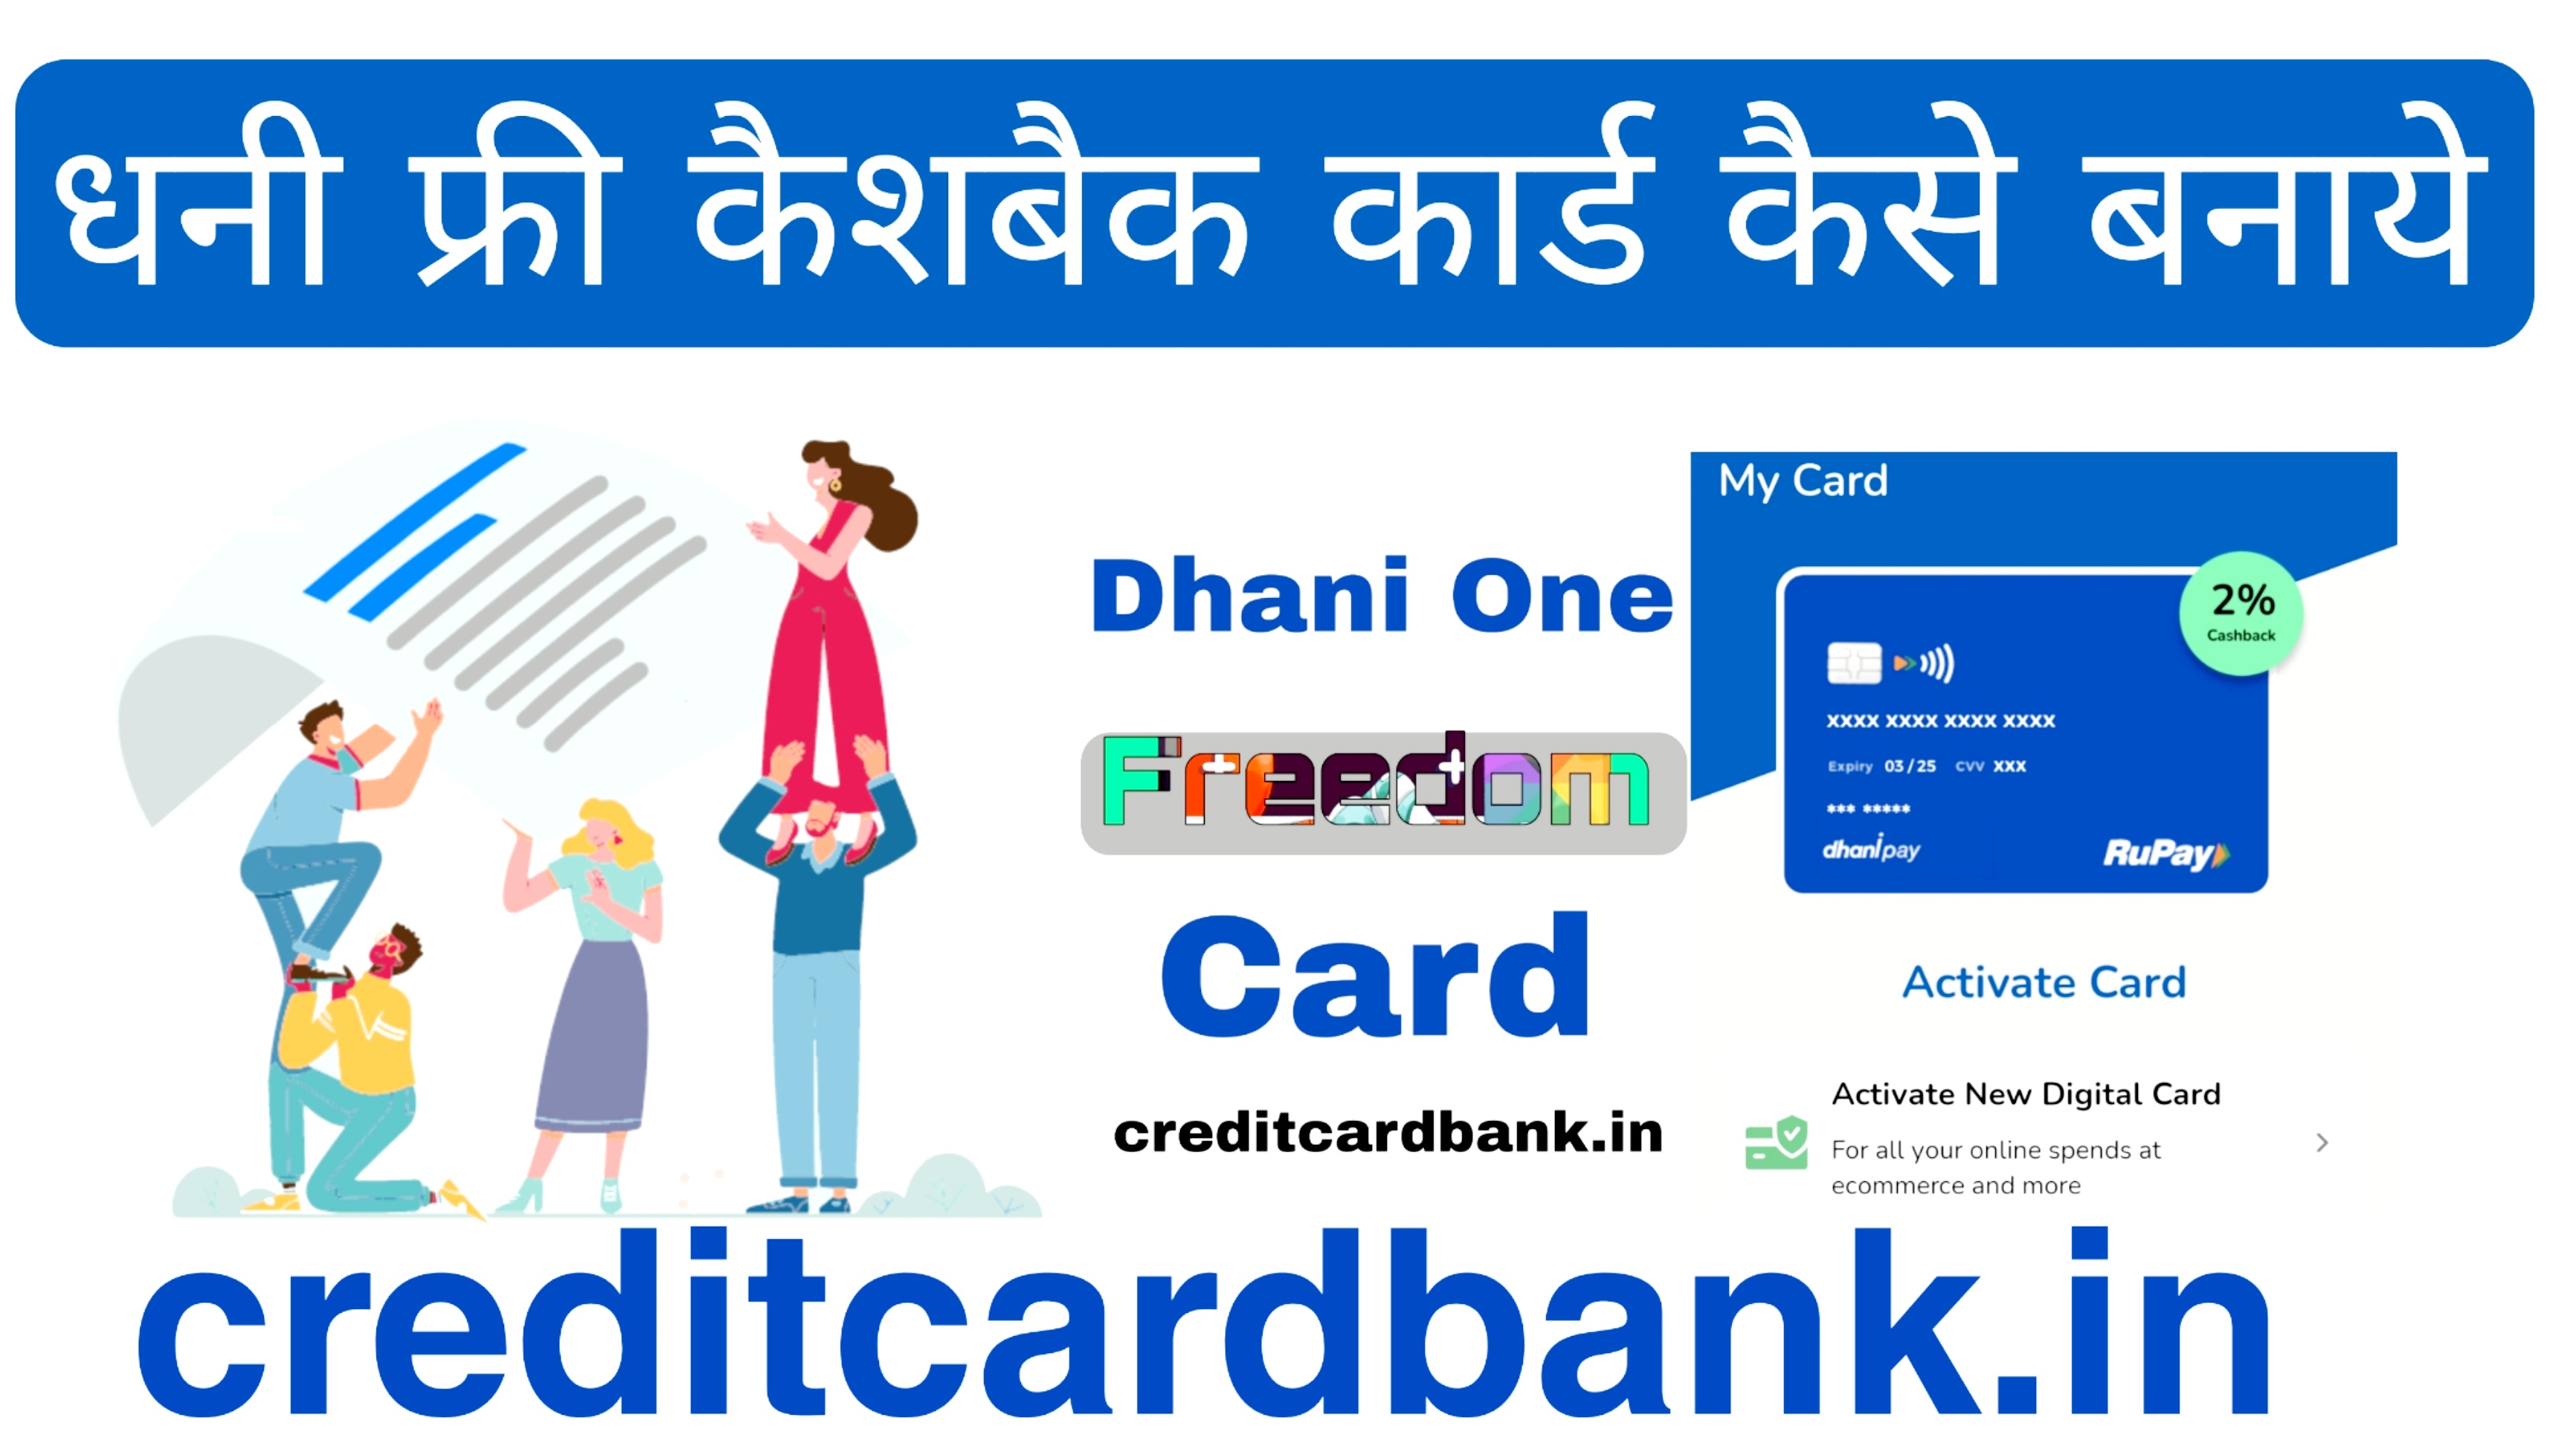 Dhani cash back card kaise apply kare